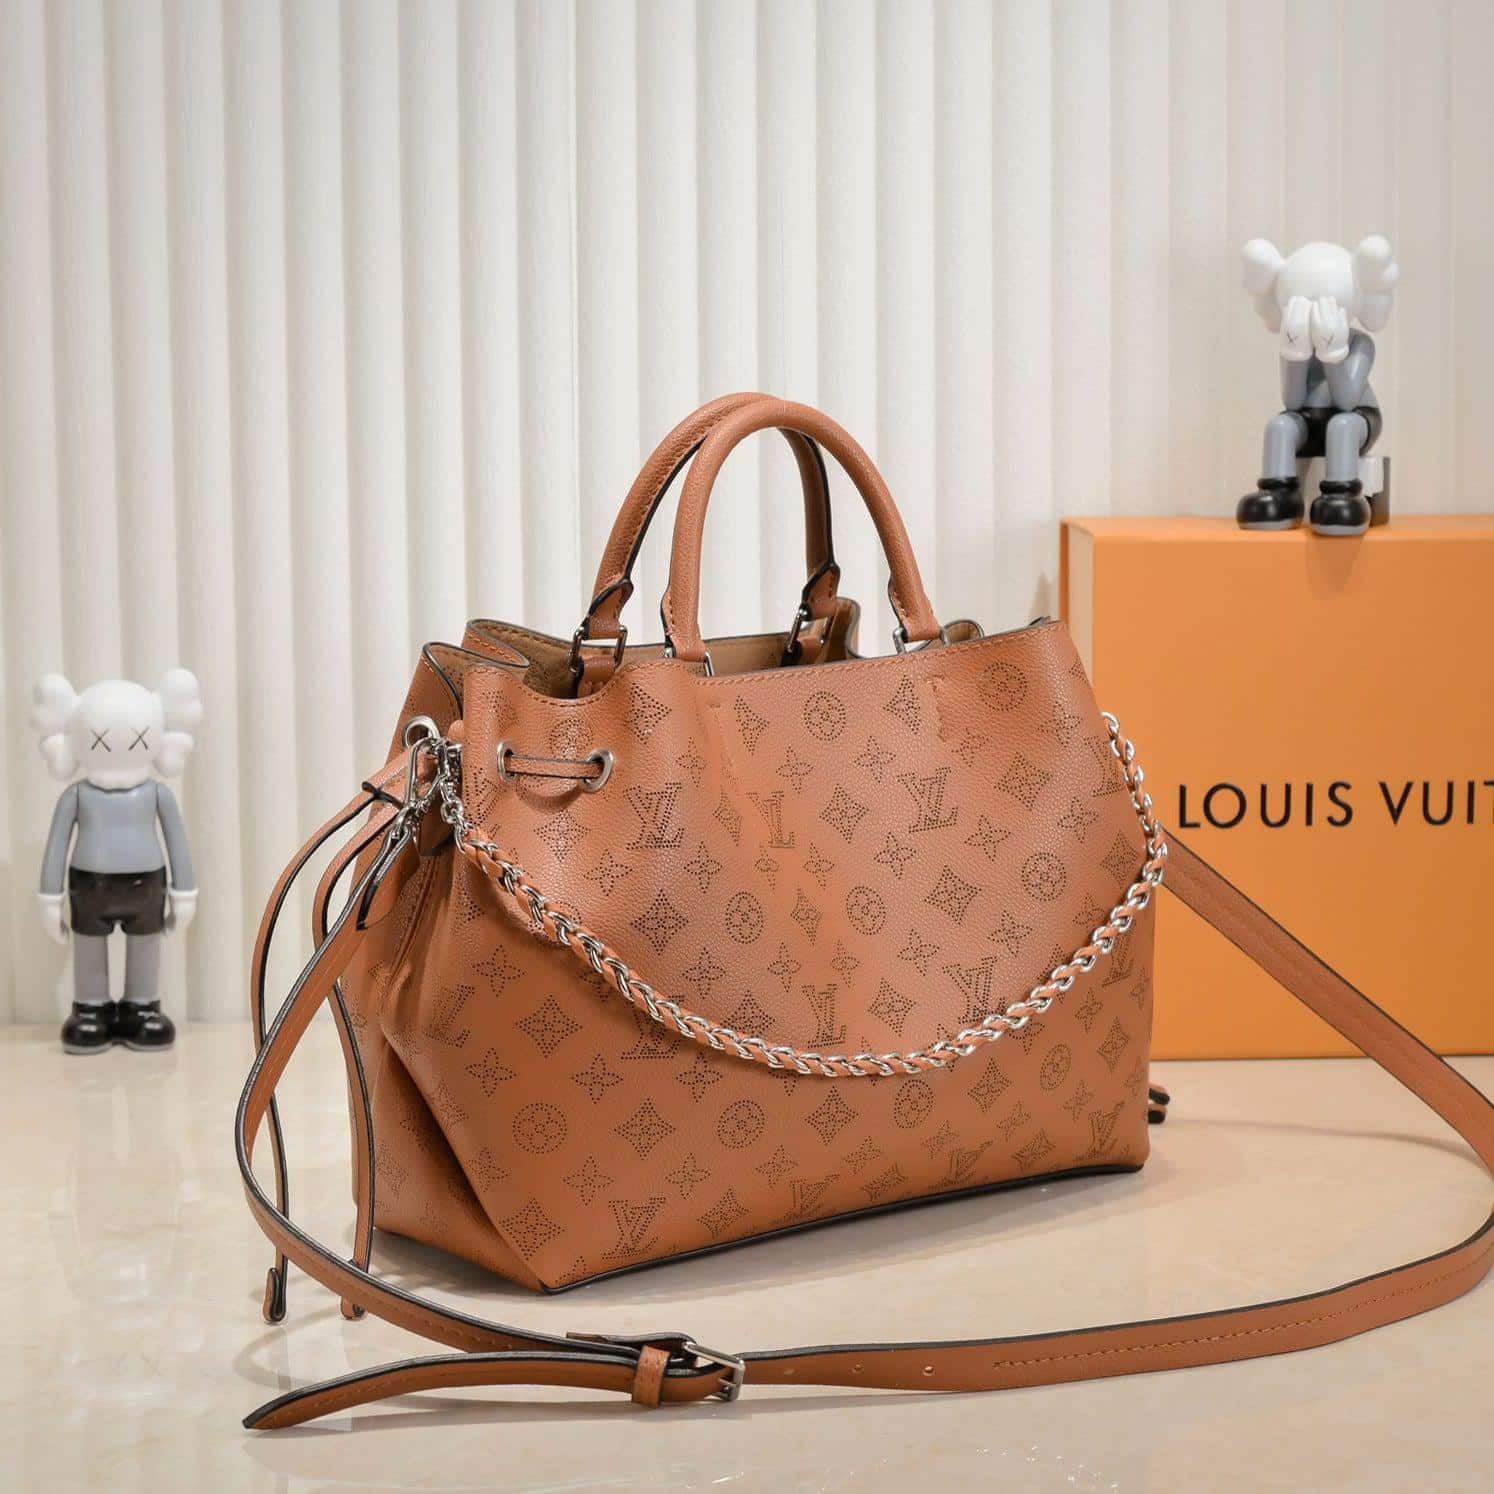 Louis Vuitton BELLA TOTE replica bag